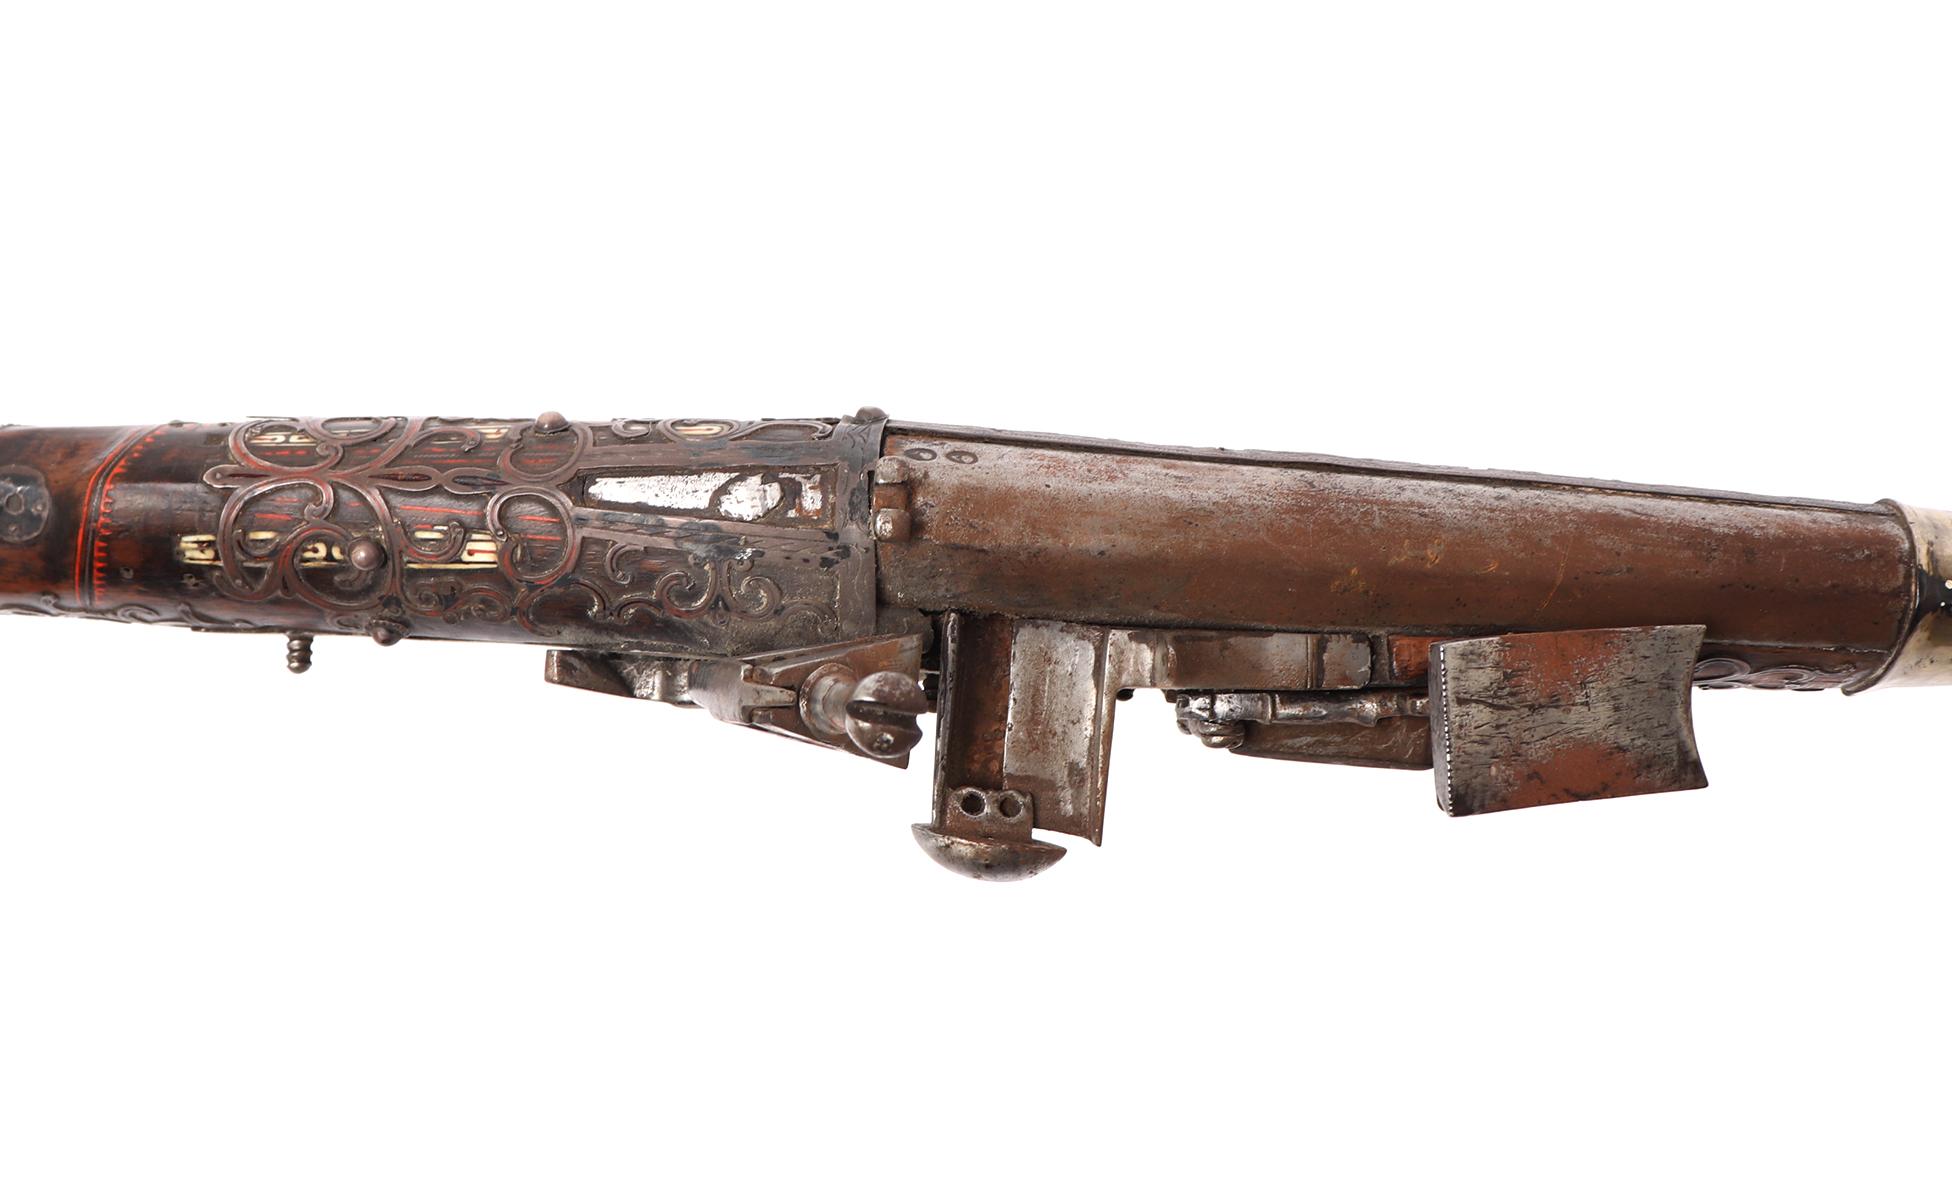 Moroccan "Berber" Long Rifle, 19th century or earlier